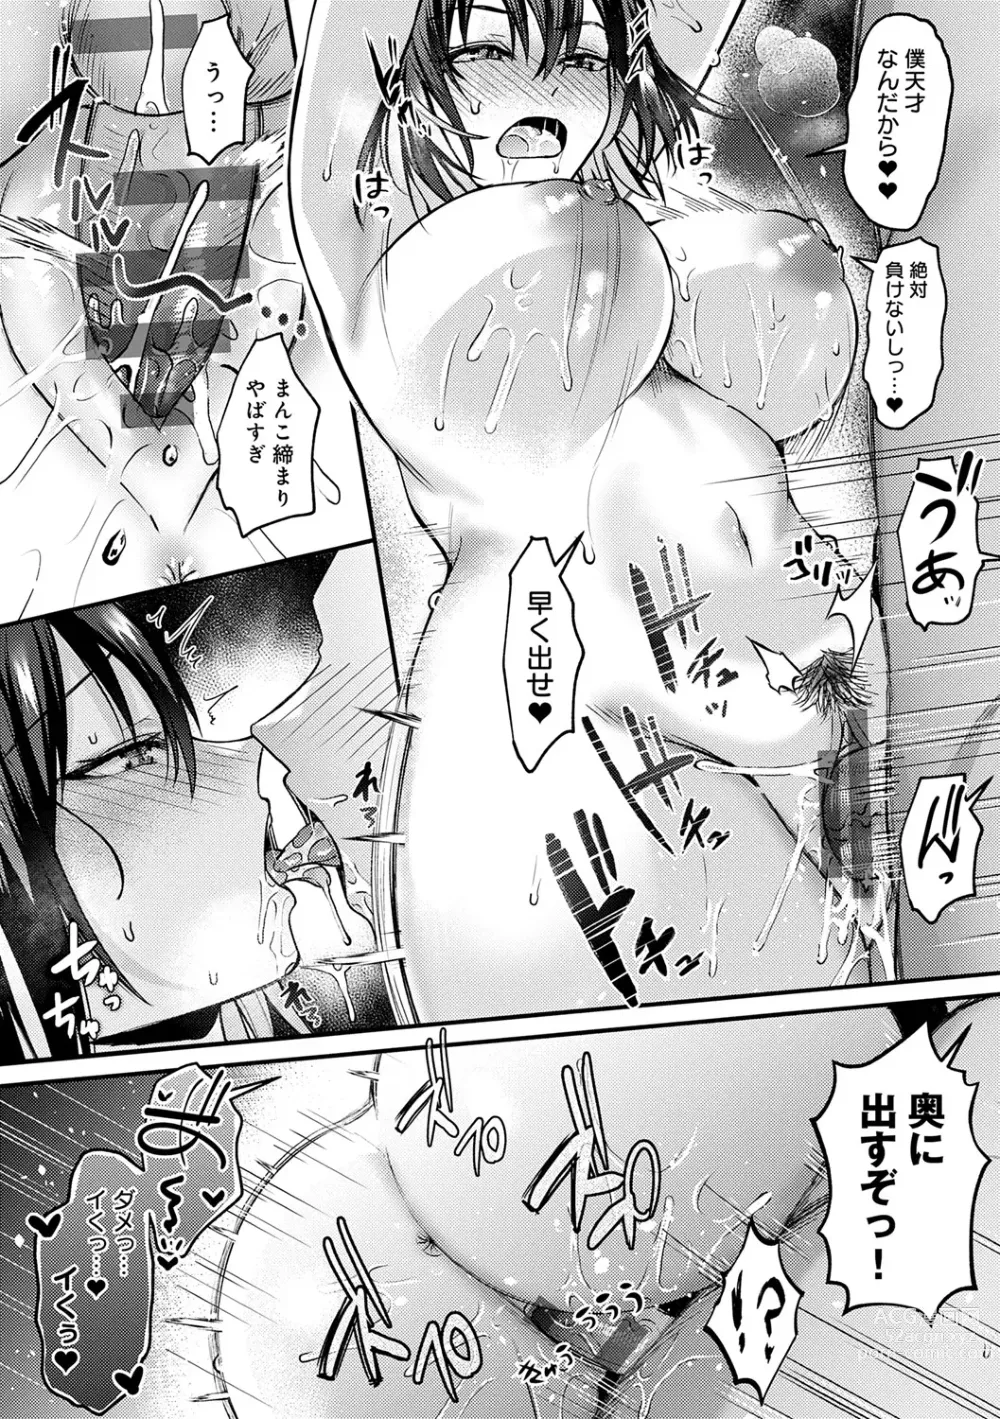 Page 27 of manga Hajimete Otoshi